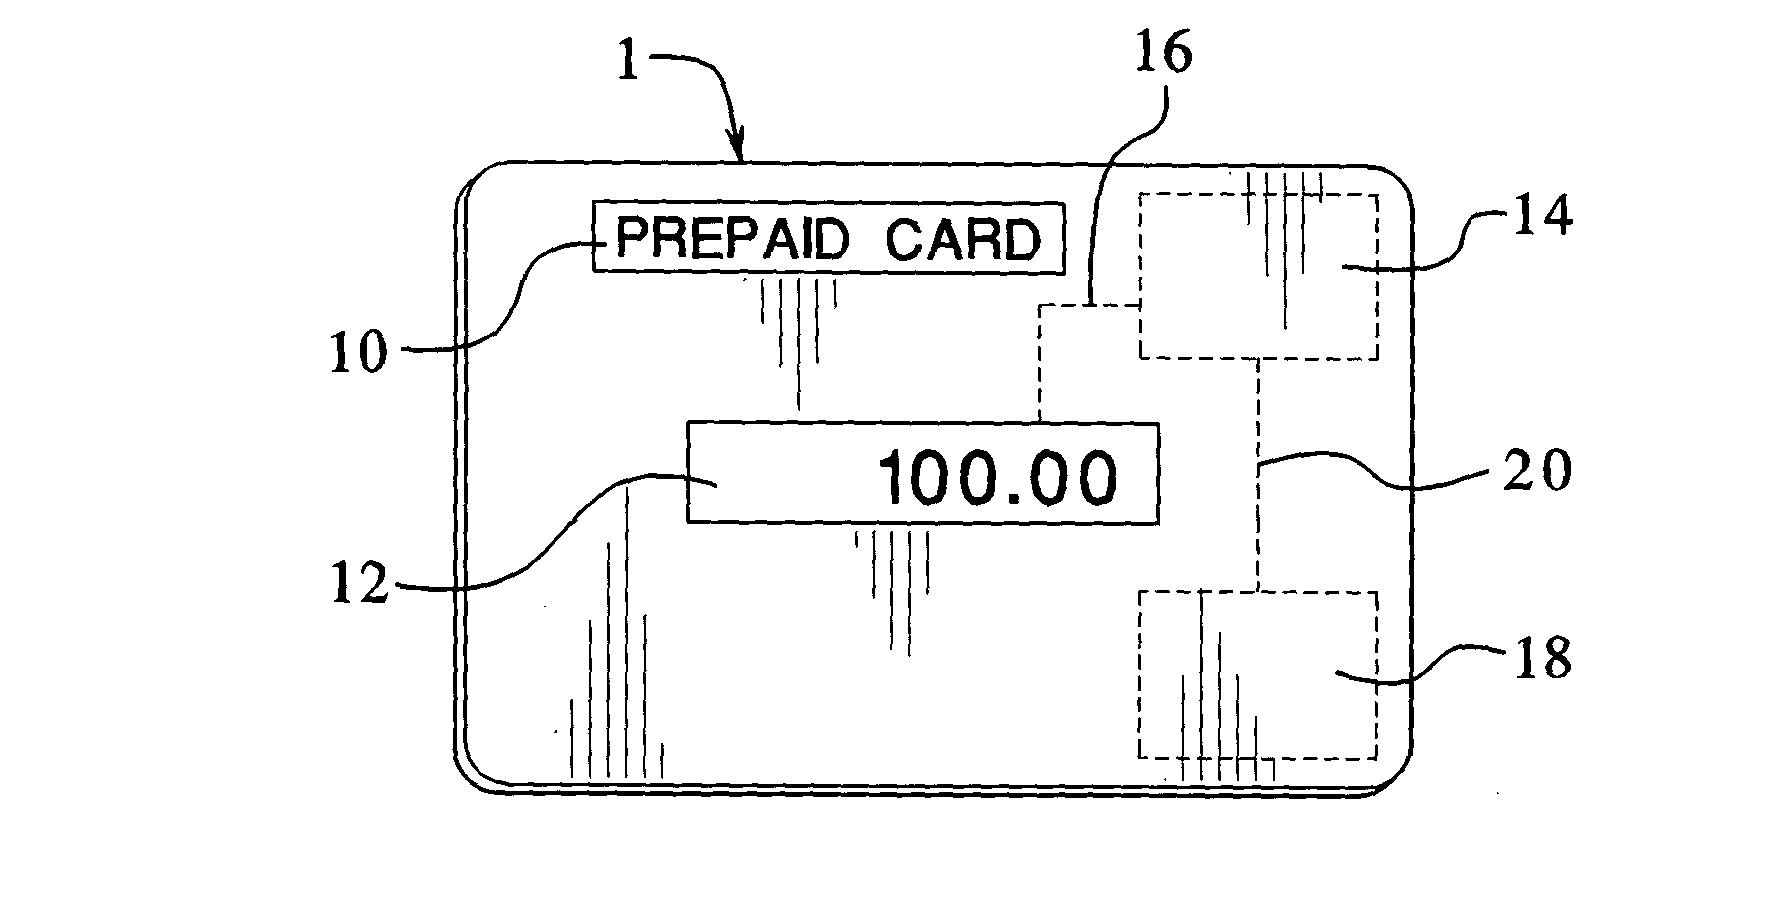 Transaction card providing displayed information